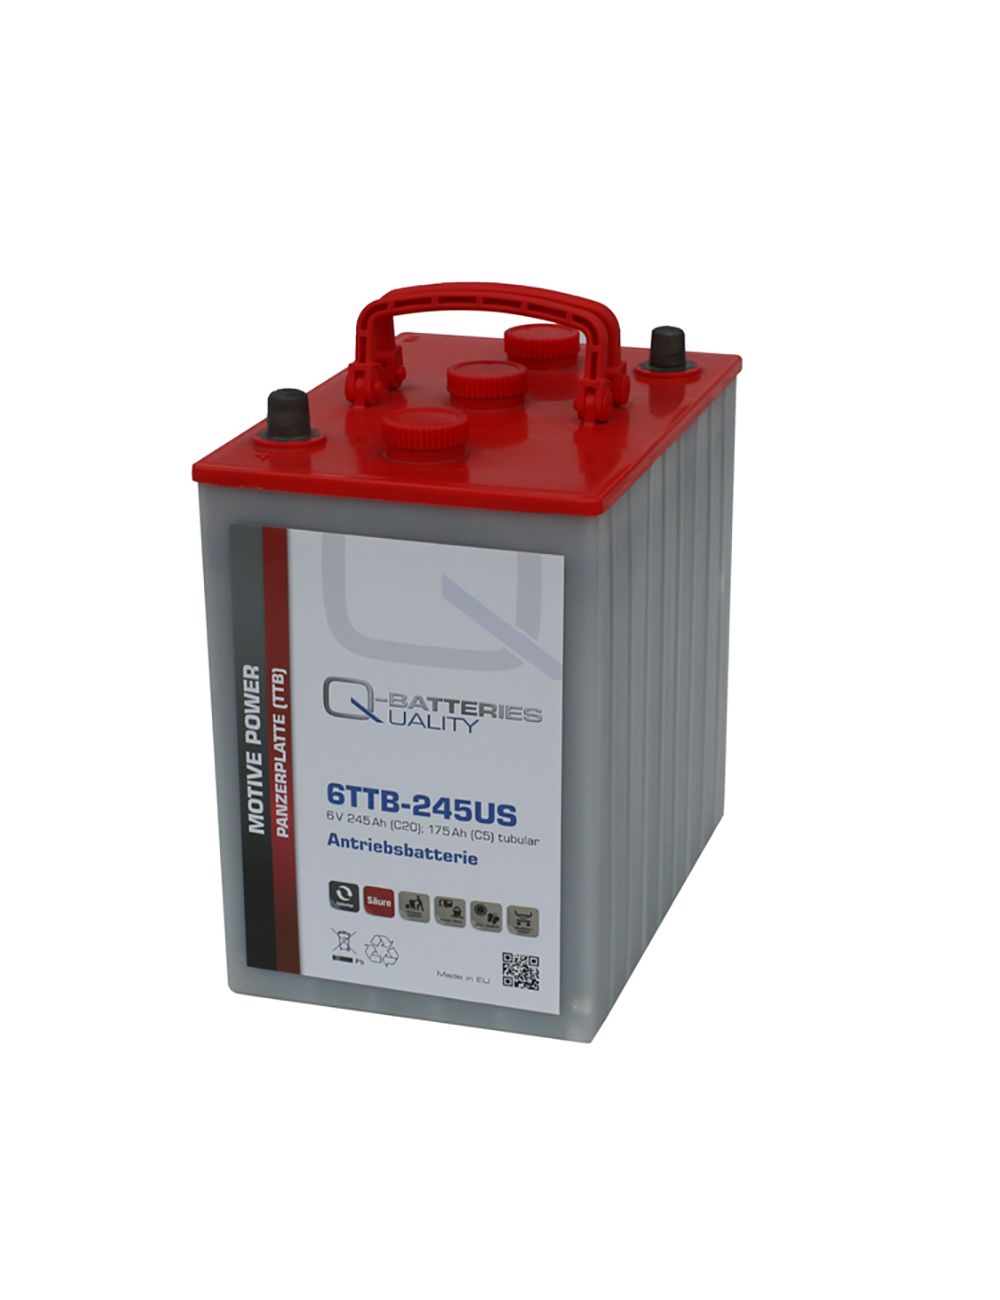 Batería 6V 245Ah C20 plomo ácido con placa tubular Q-Batteries serie TTB - 6TTB-245US -  - 4250889600488 - 1